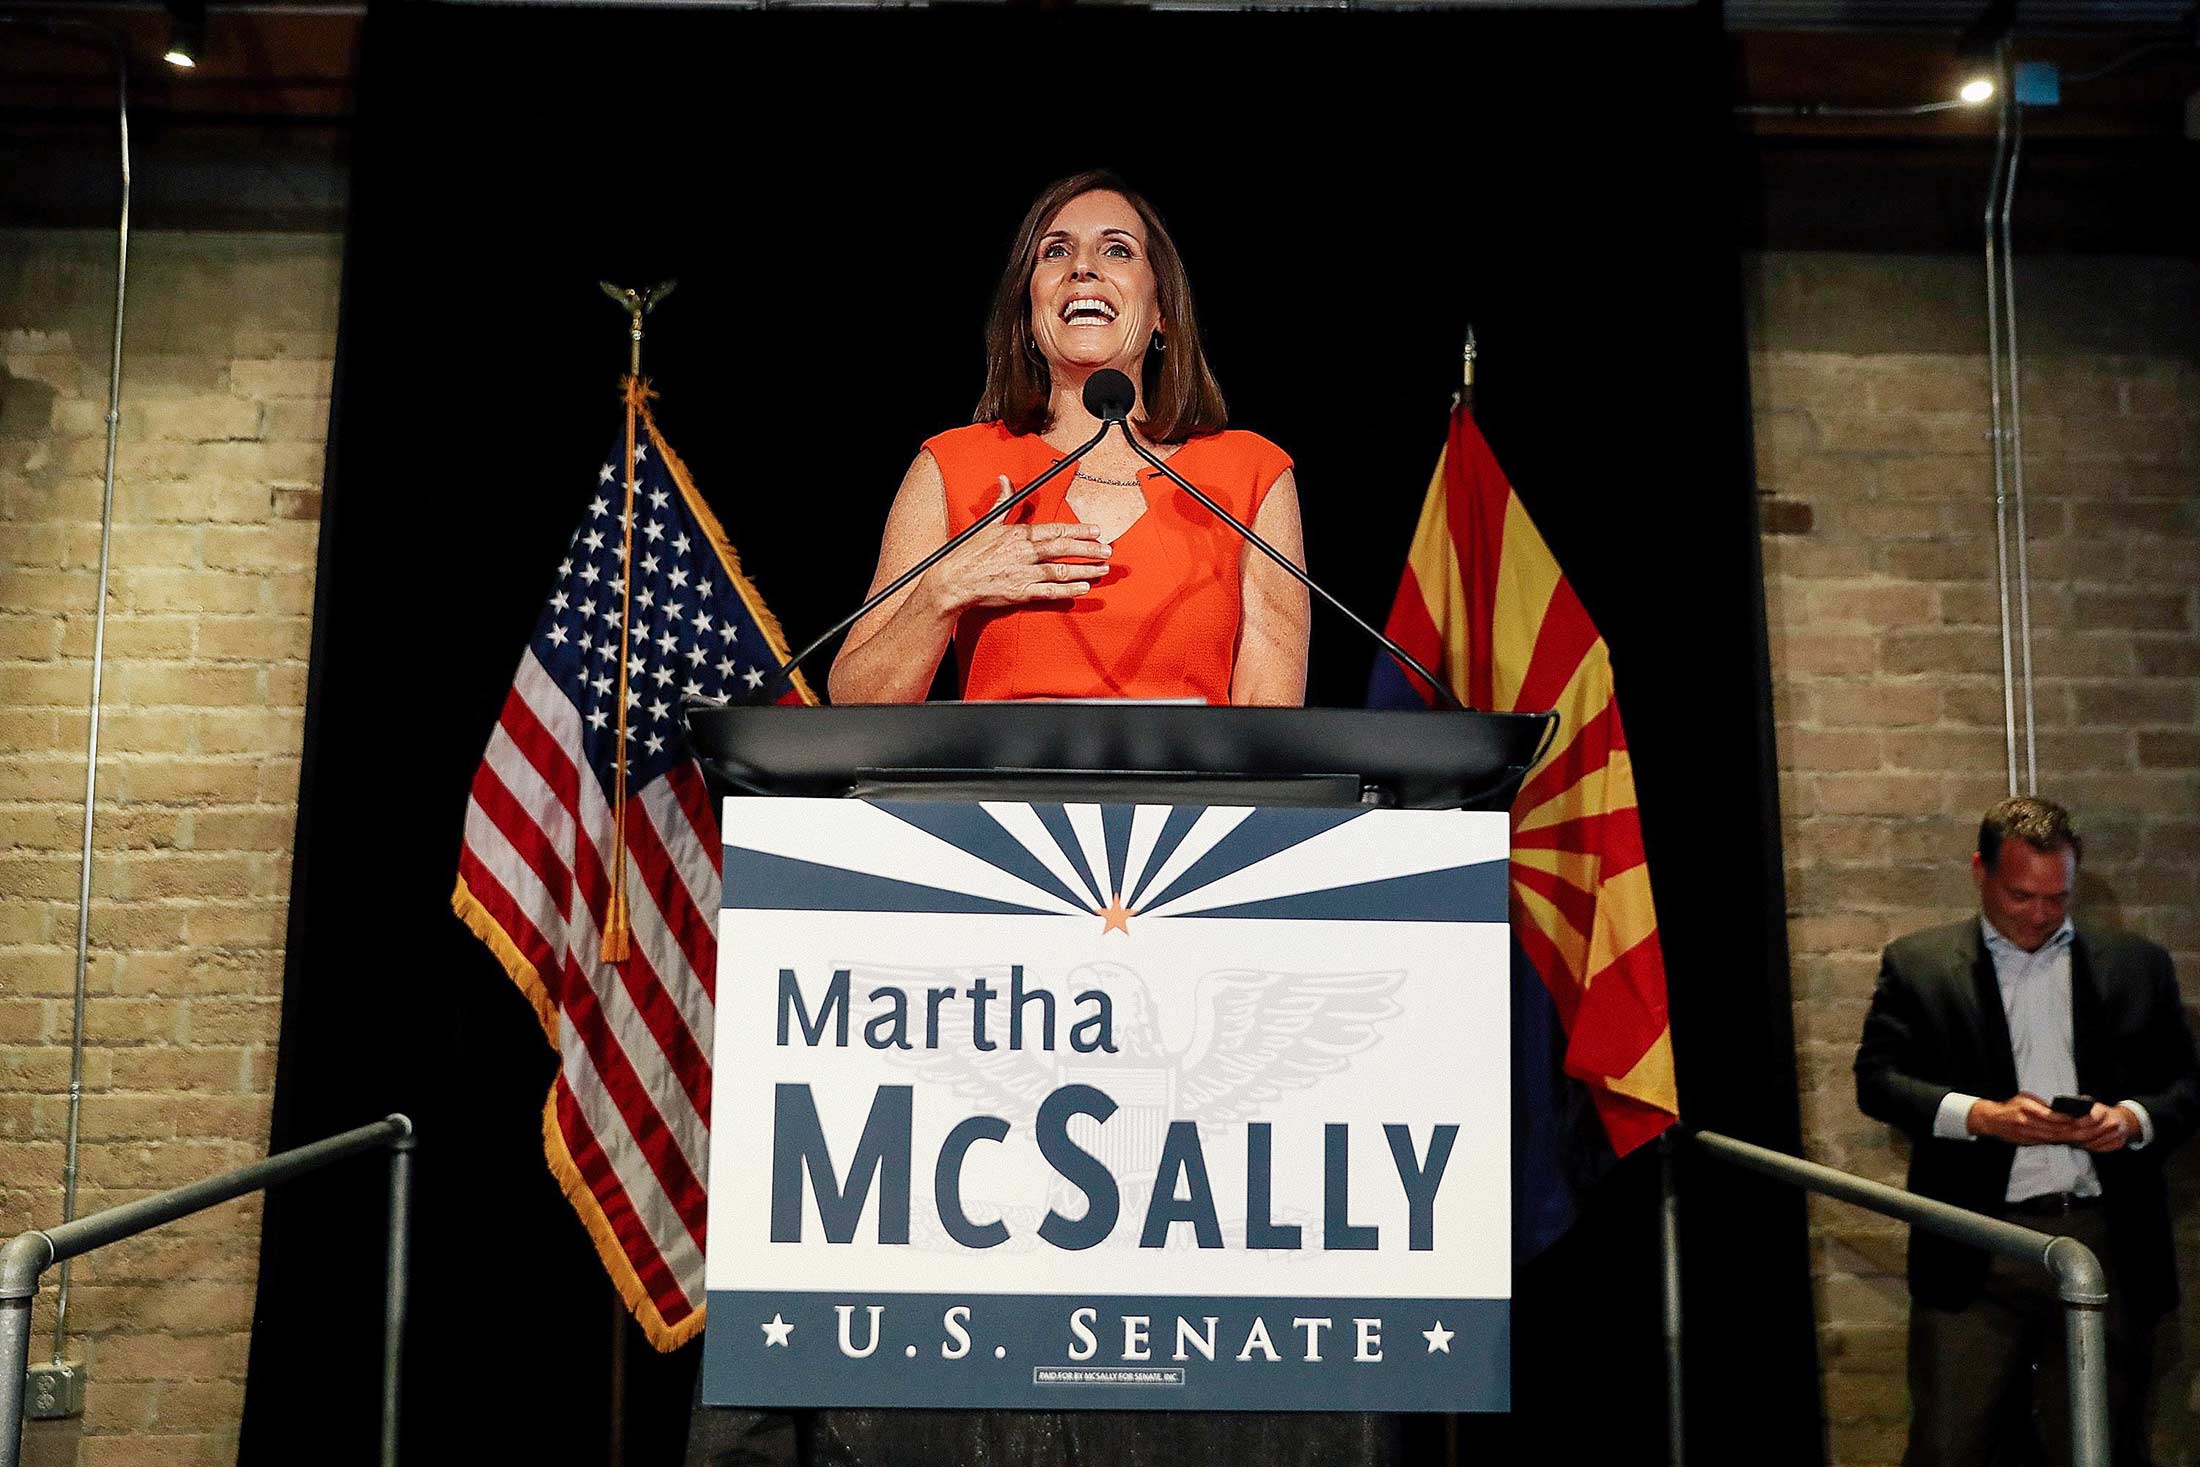 Martha McSally speaks from behind a podium that says "Martha McSally U.S. Senate."